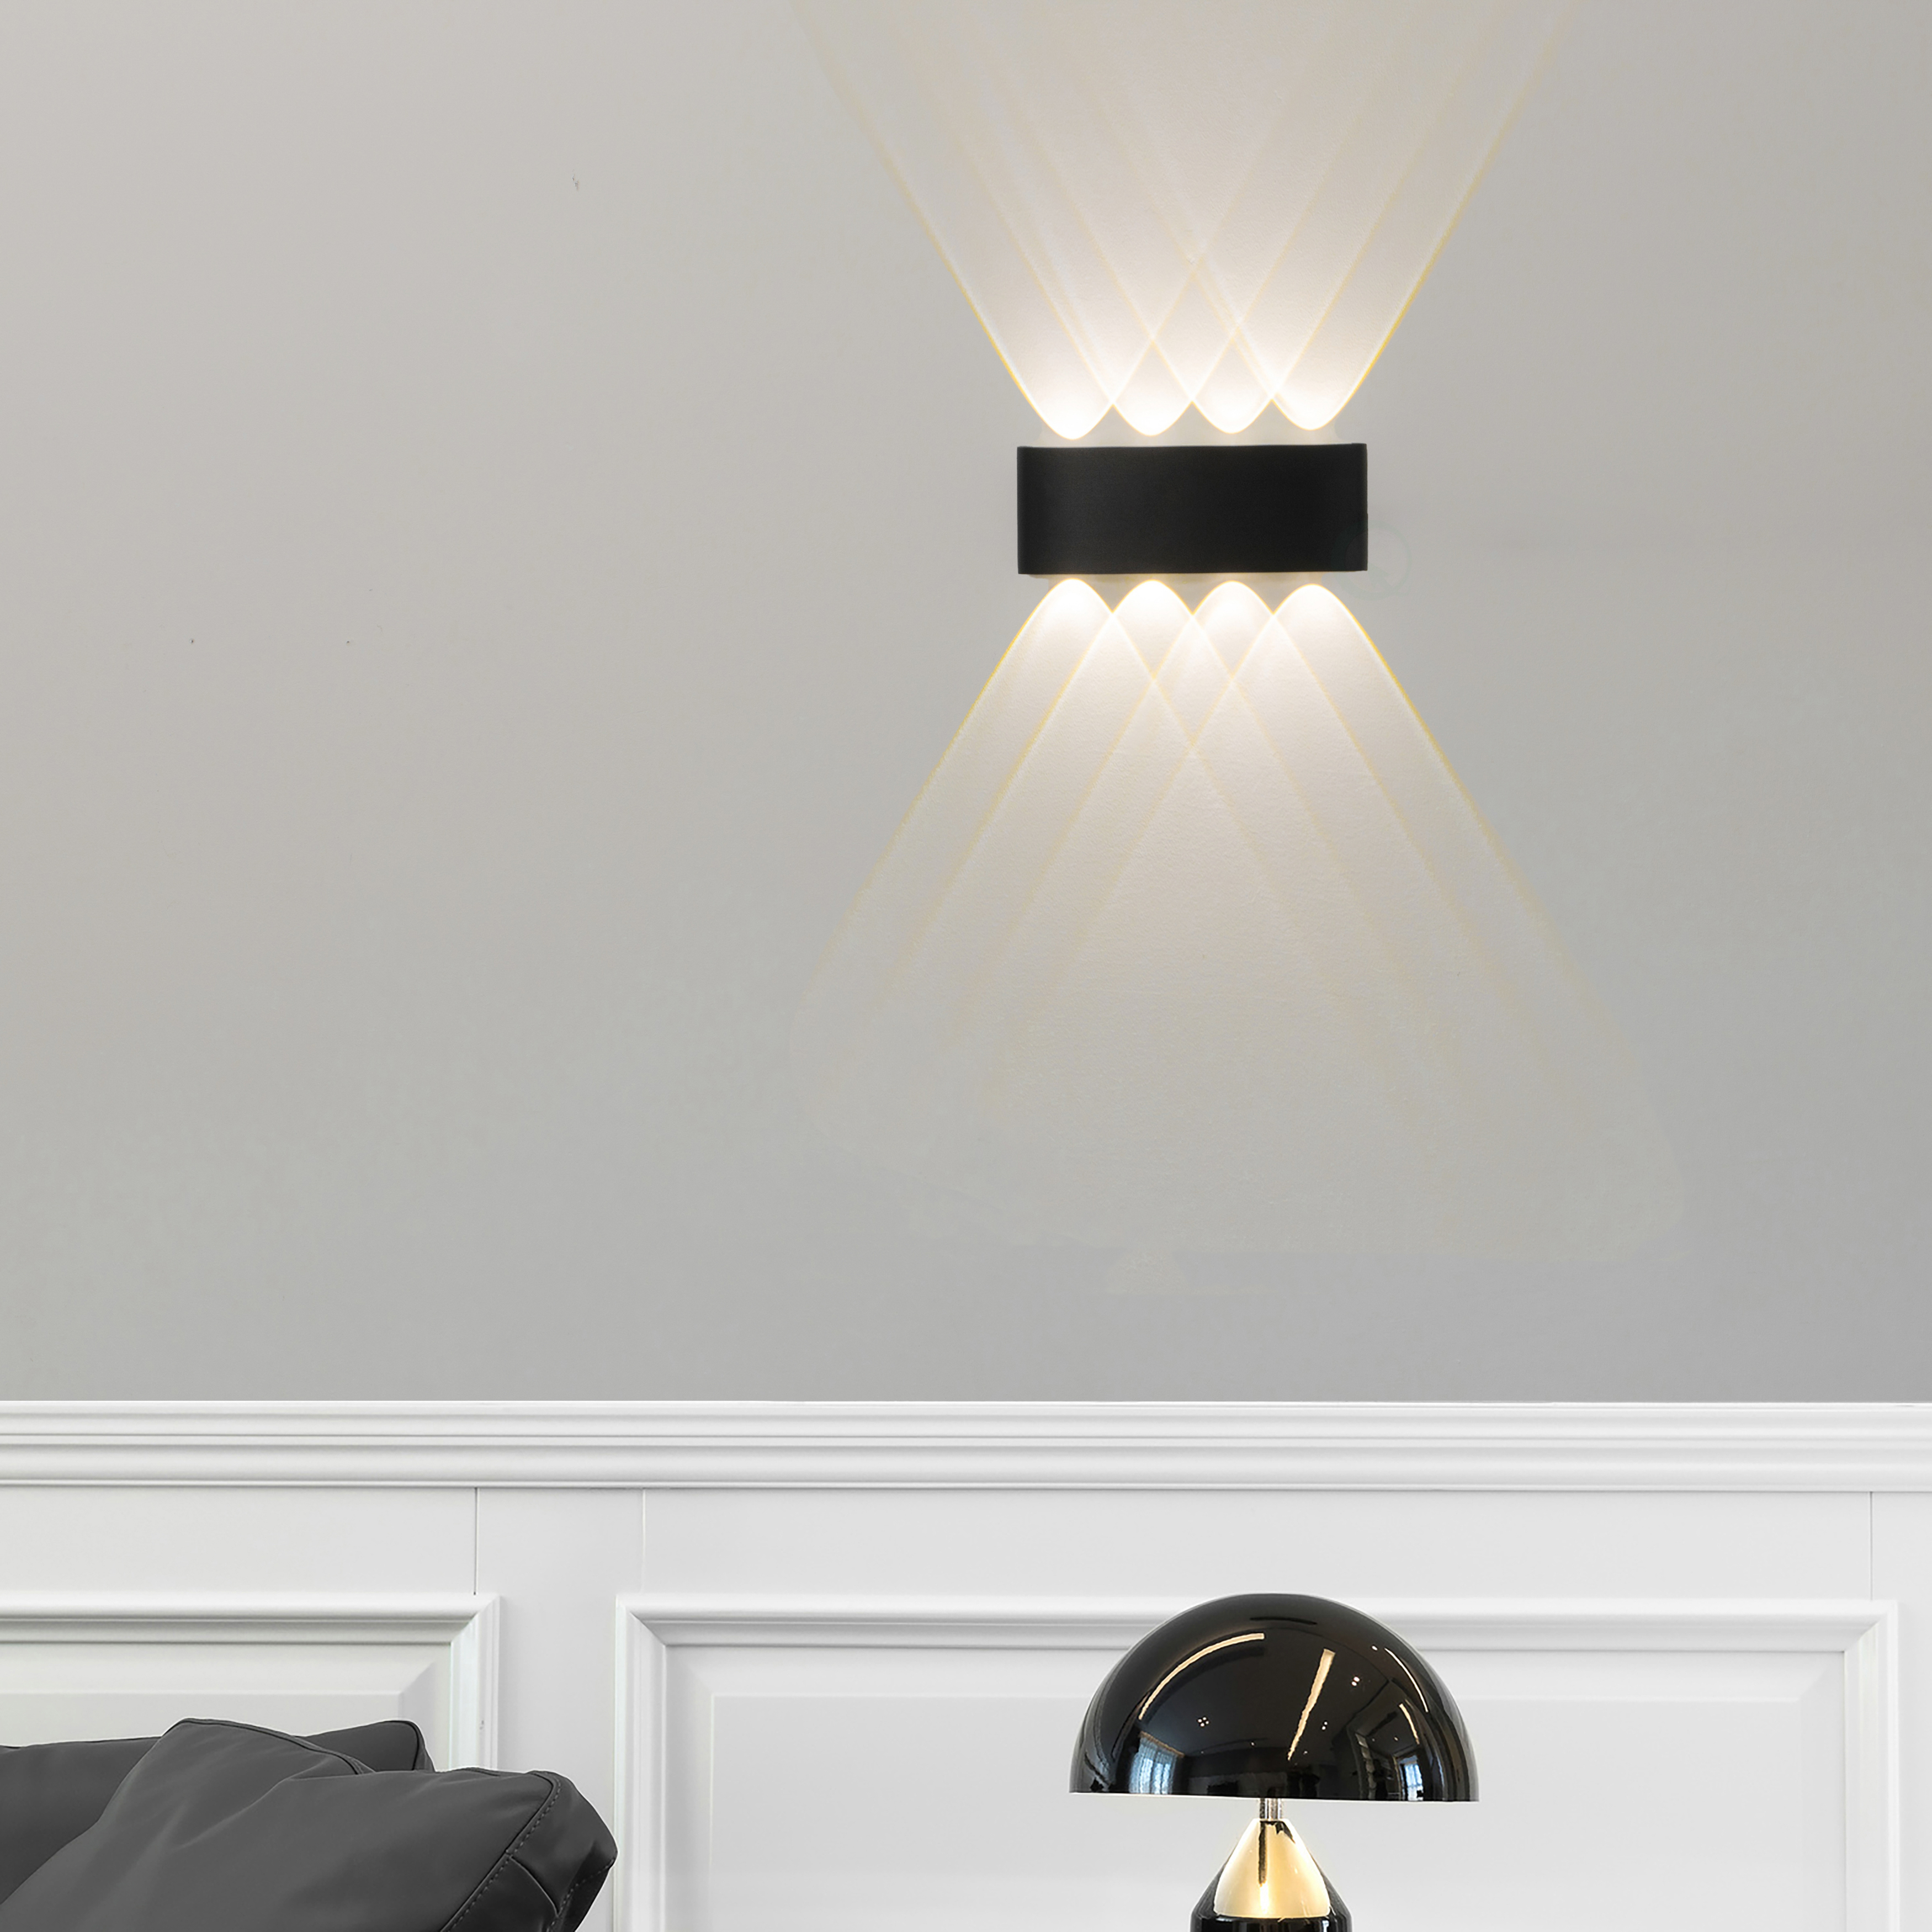 Black Contemporary Decorative Waterproof Aluminum Wall Lamp For Indoors And Outdoors, 8 Watt Cool White 4000K - Black 8Watt Set Of 4